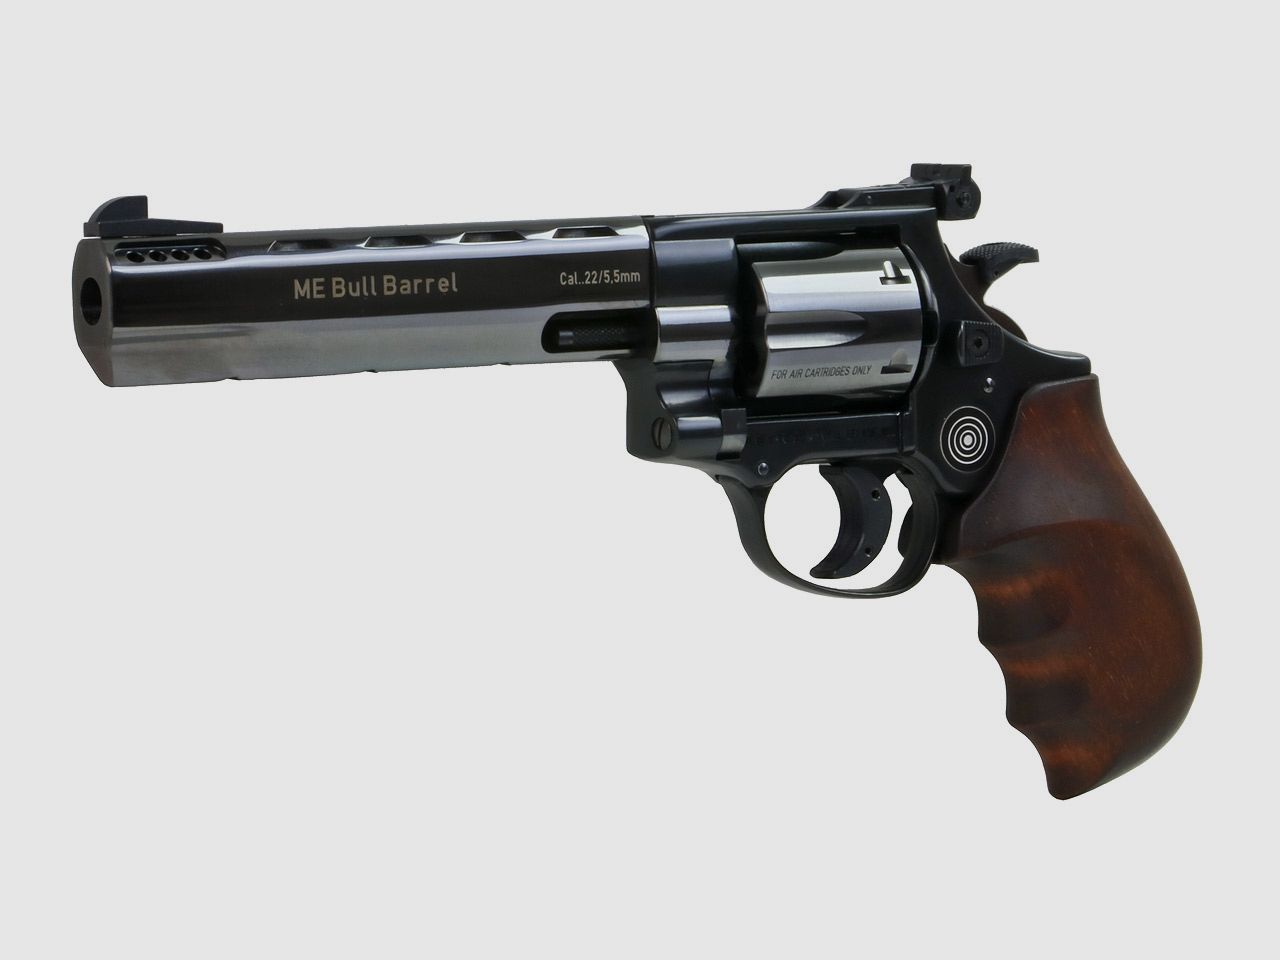 Laufmantel 6 Zoll fĂĽr LEP Druckluft Revolver ME Bull Barrel, brĂĽniert, Kaliber 5,5 mm